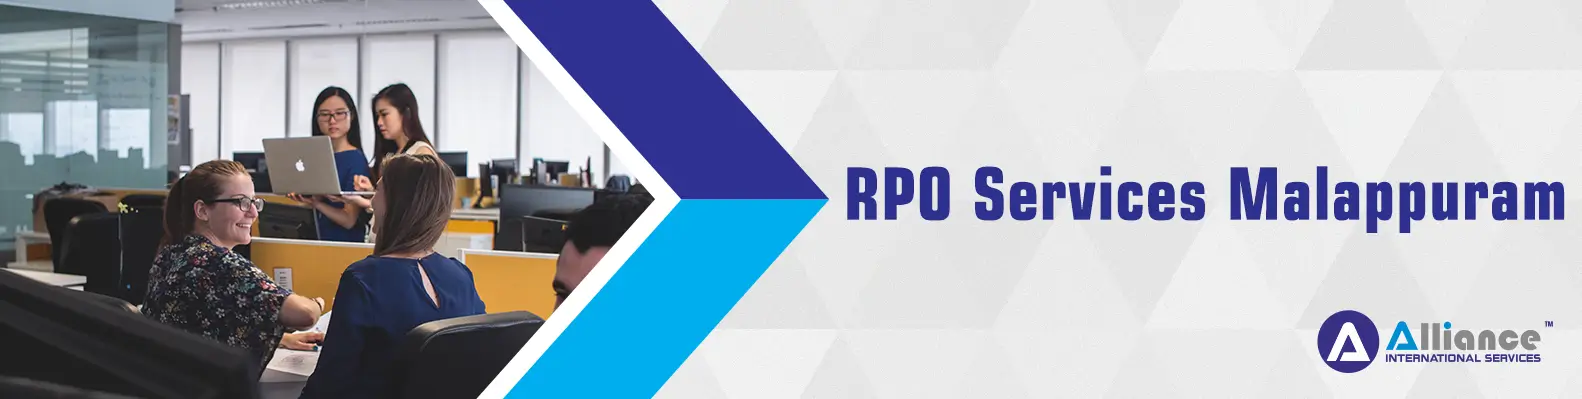 RPO Services Malappuram